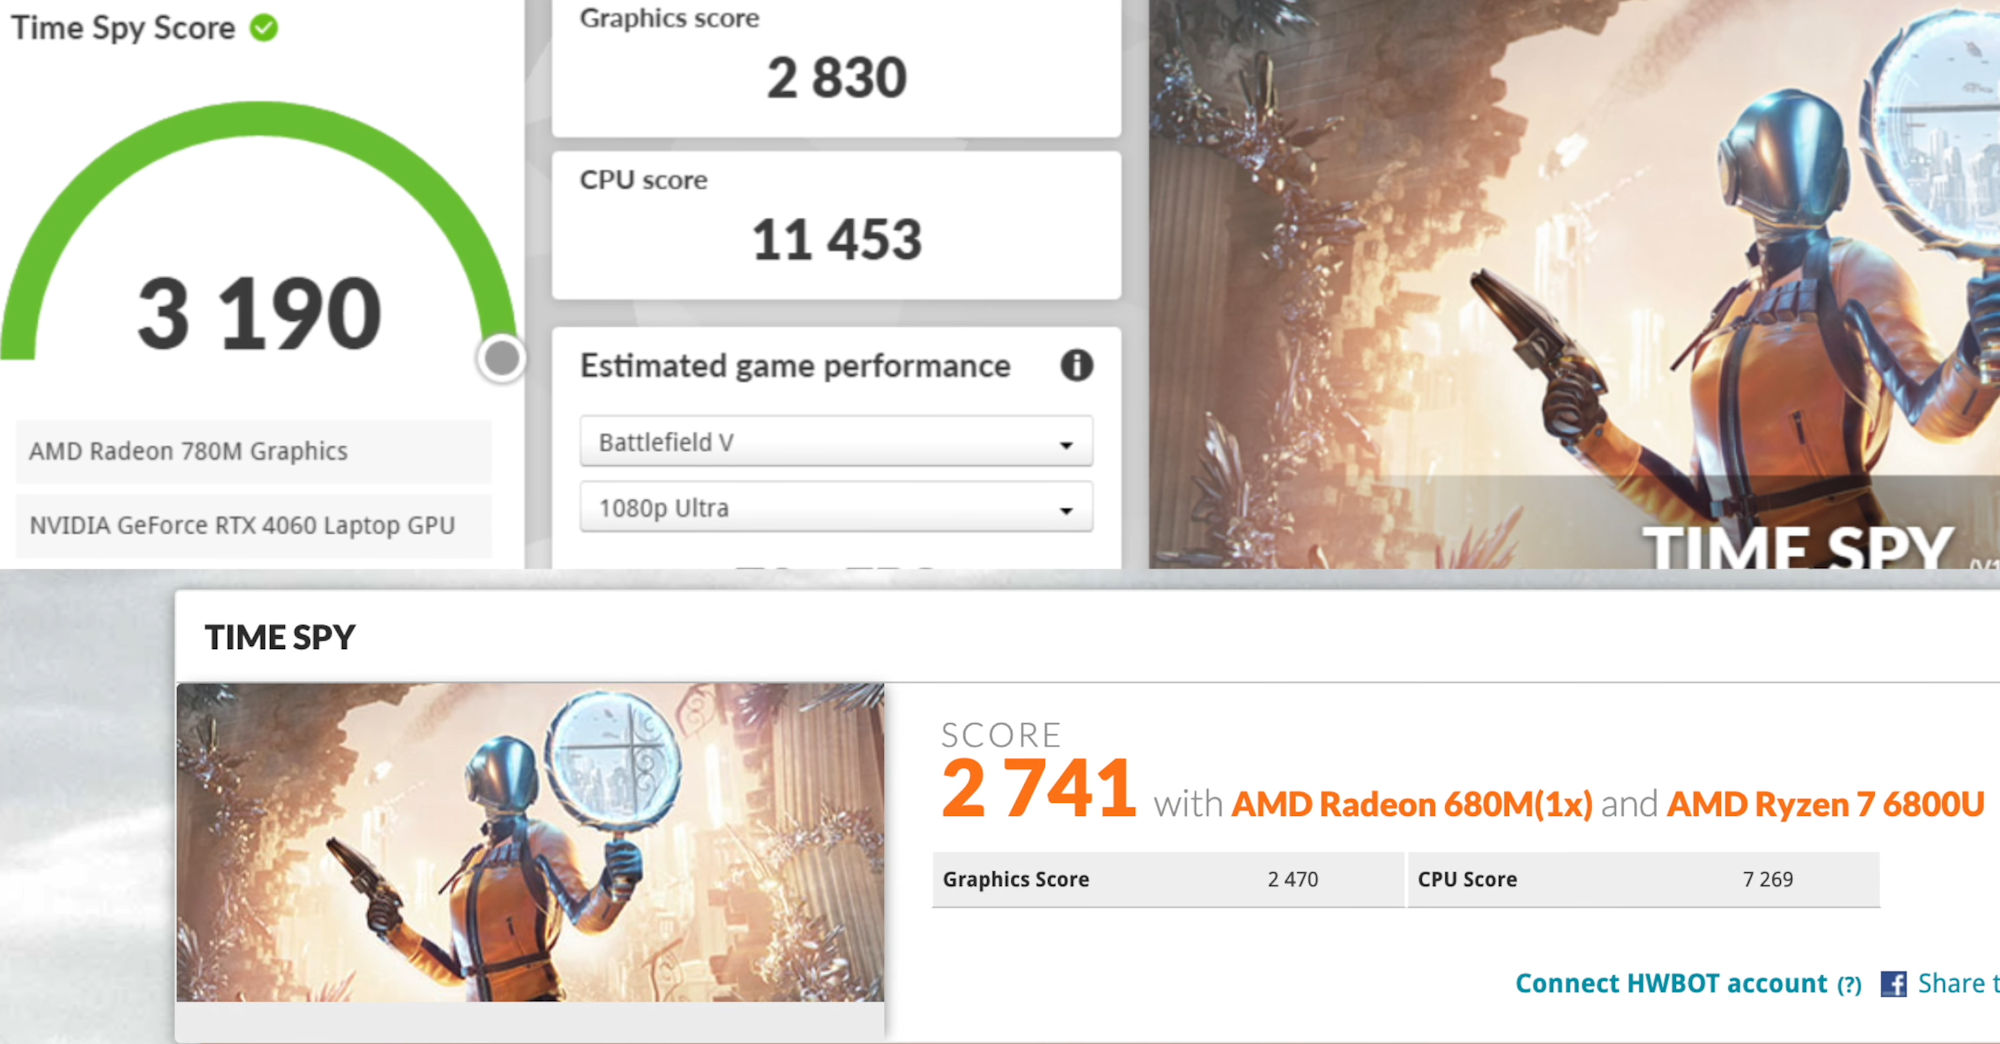 AMD Ryzen 9 7940HS APU with Radeon 780M iGPU shows stunning gaming  performance